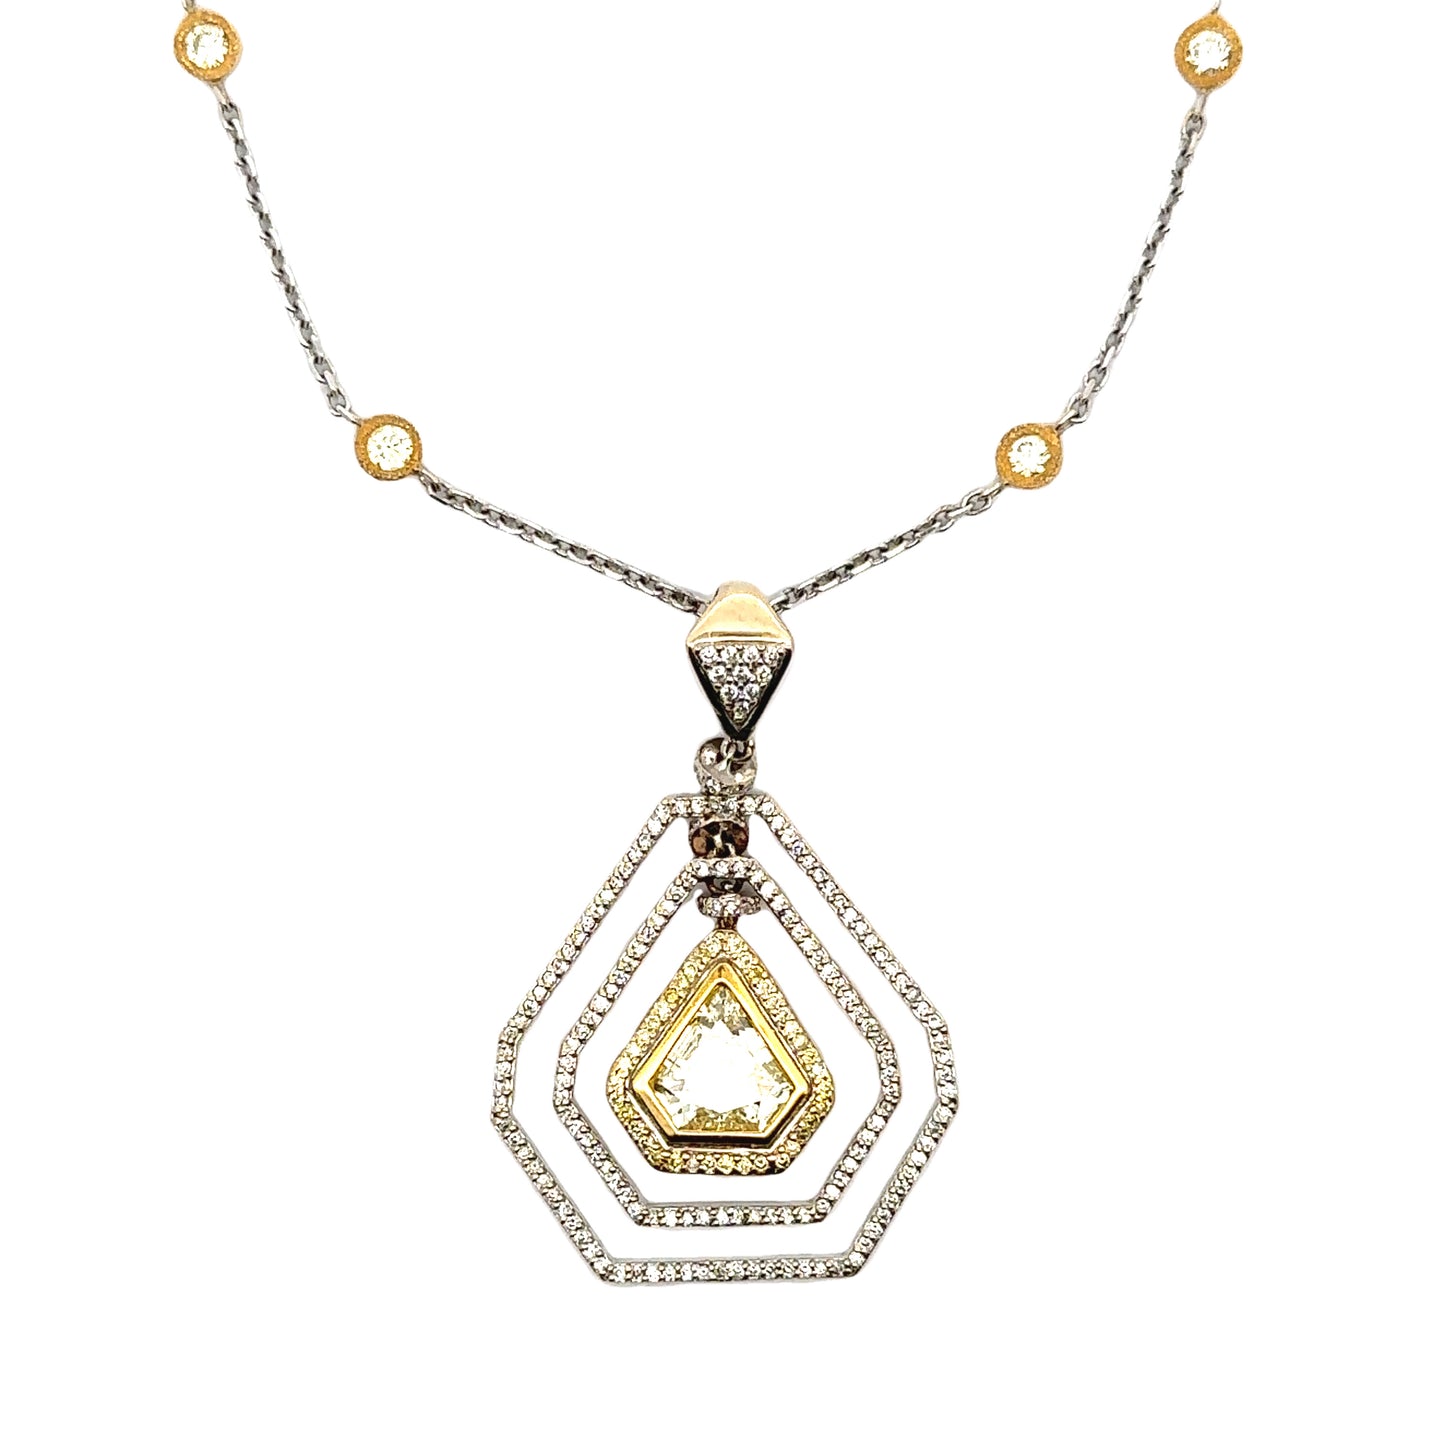 Exquisite 18K White & Yellow Gold Diamond Necklace